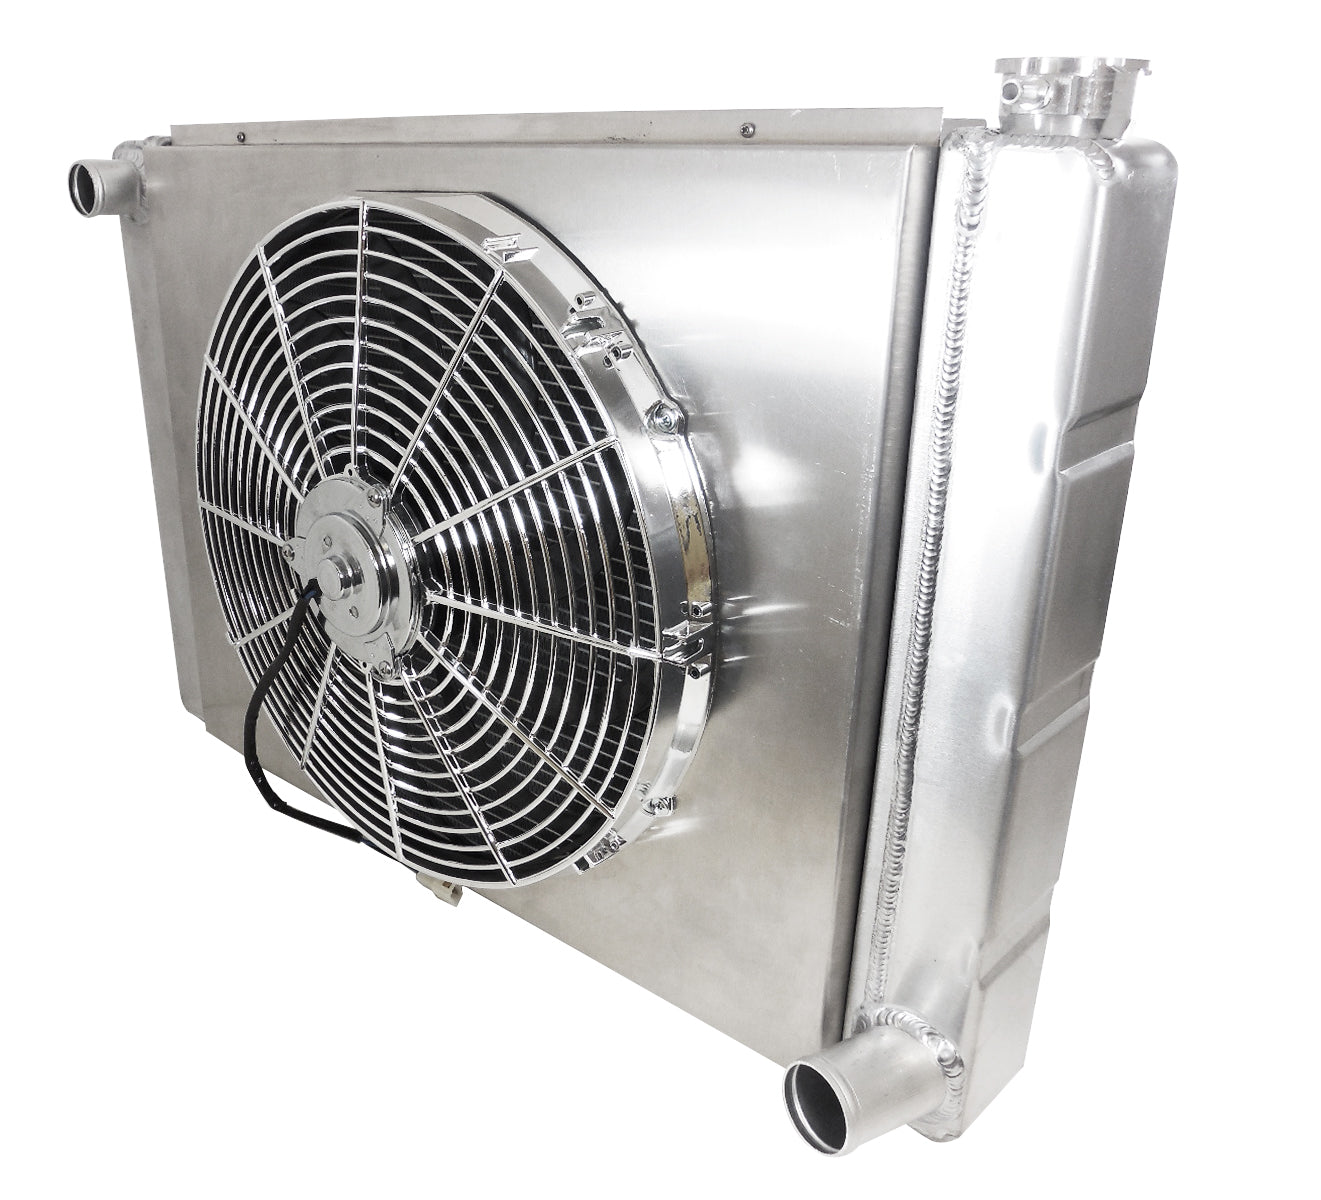 Racing Power Company R1053C Universal(single-pass)radiator and cooling fan